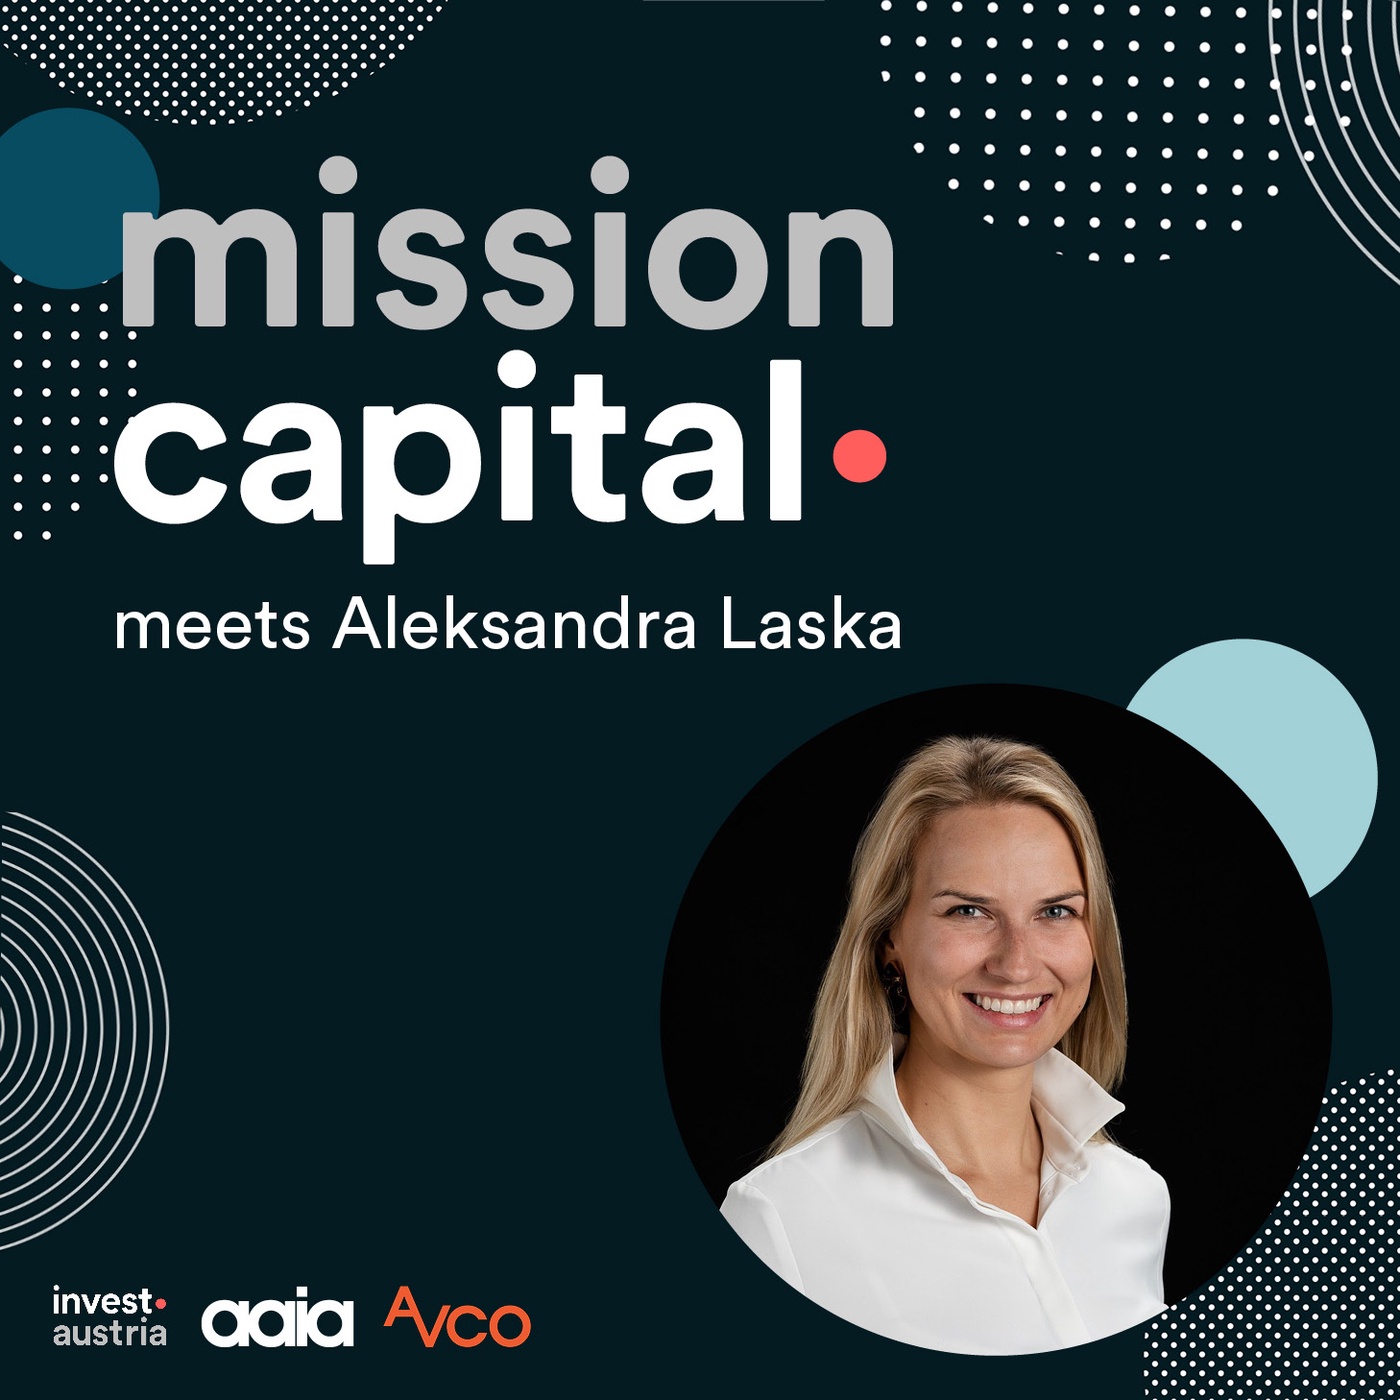 #2 mission capital meets Aleksandra Laska